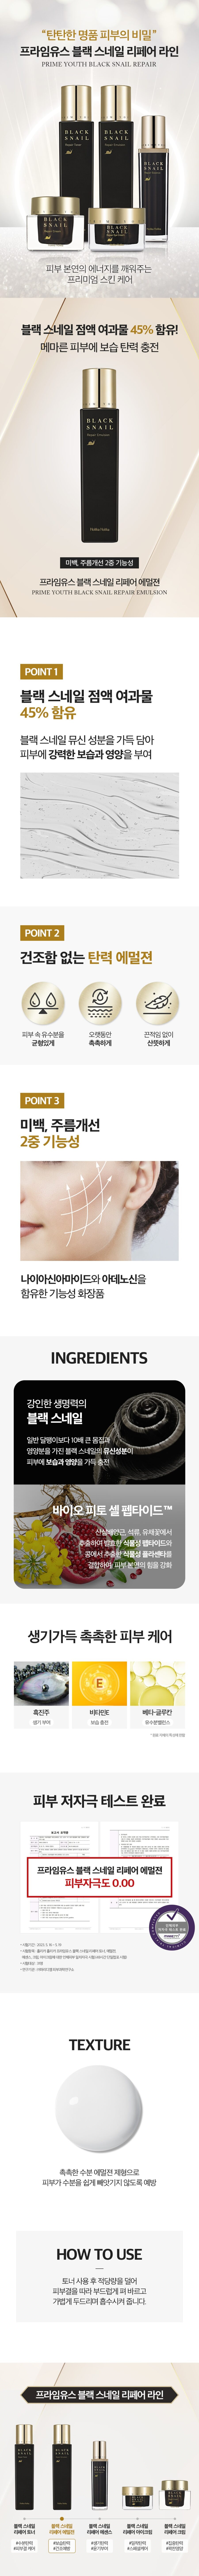 Holika Holika Prime Youth Black Snail Repair Emulsion korean skincare product online shop malaysia china india1